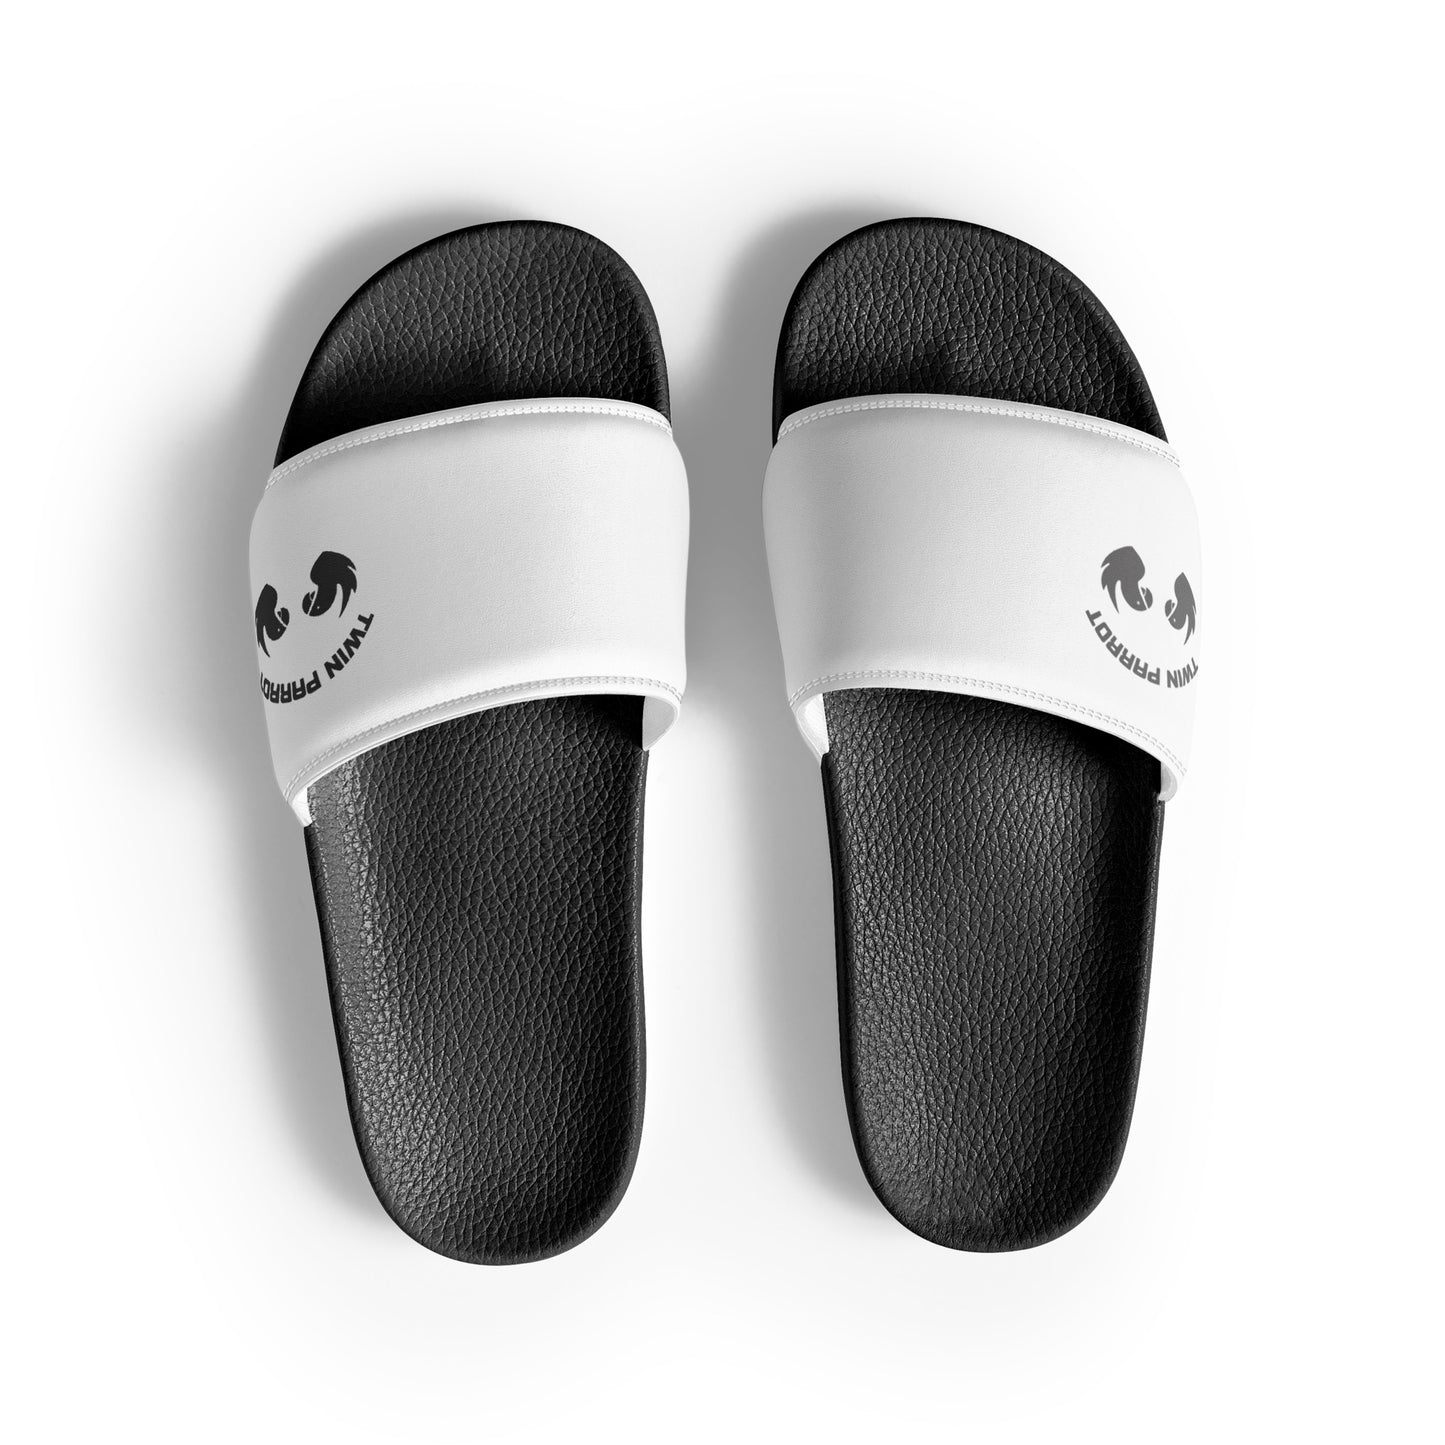 Cloud Comfort Slides: Handmade Black Sandals for Effortless Luxury